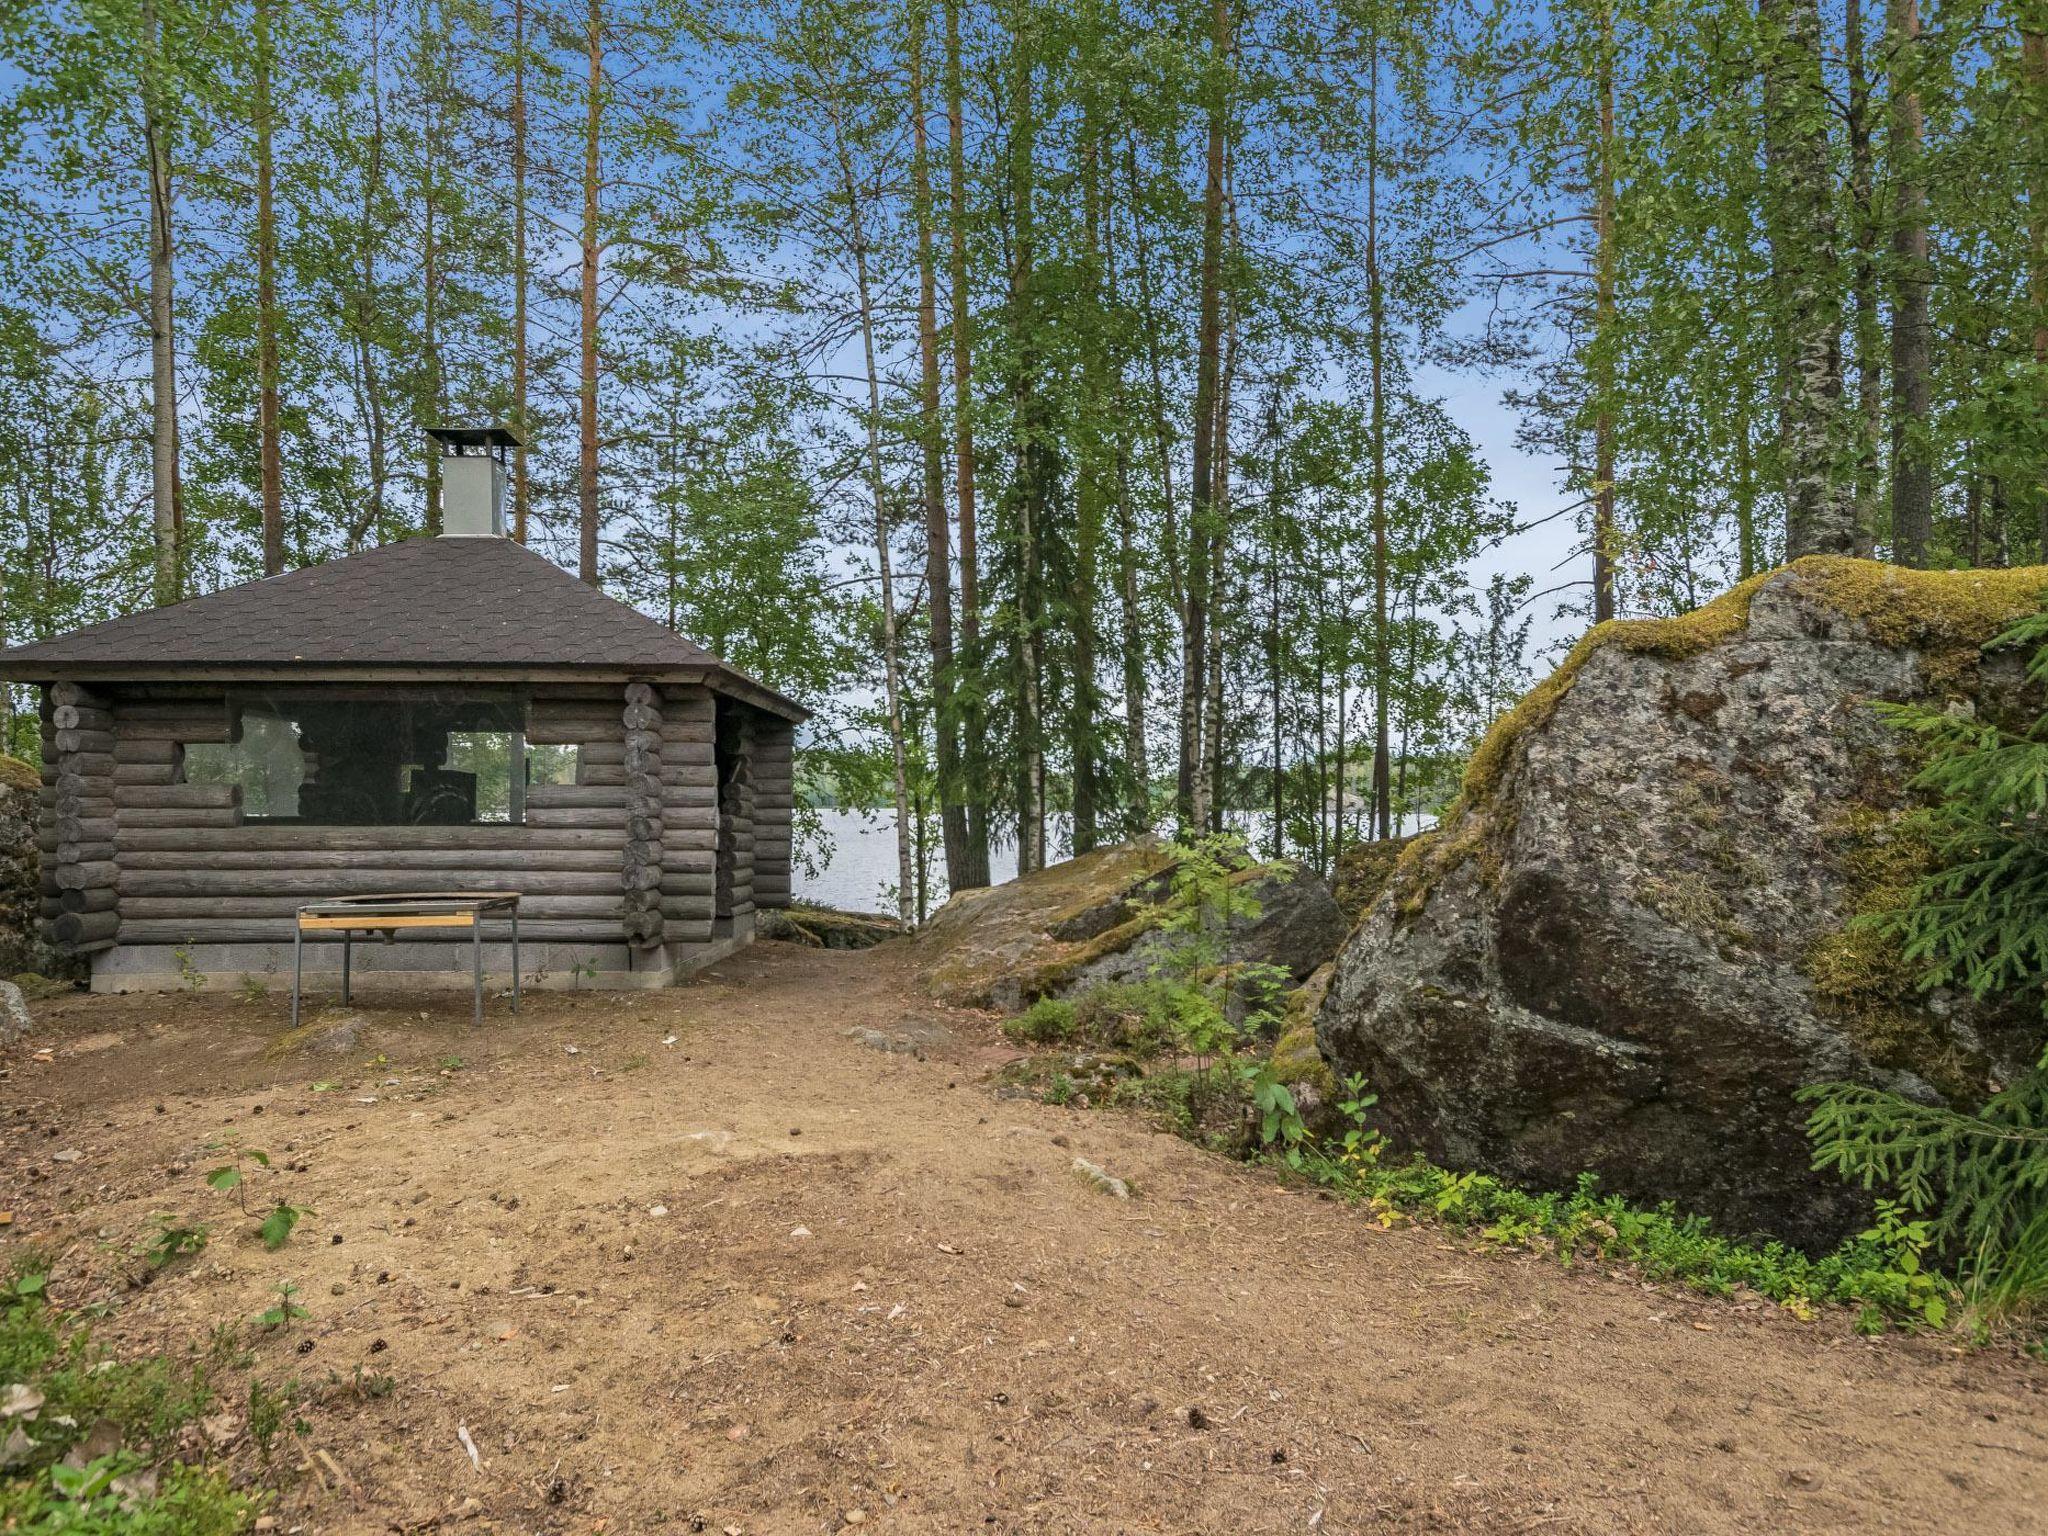 Photo 7 - 5 bedroom House in Mikkeli with sauna